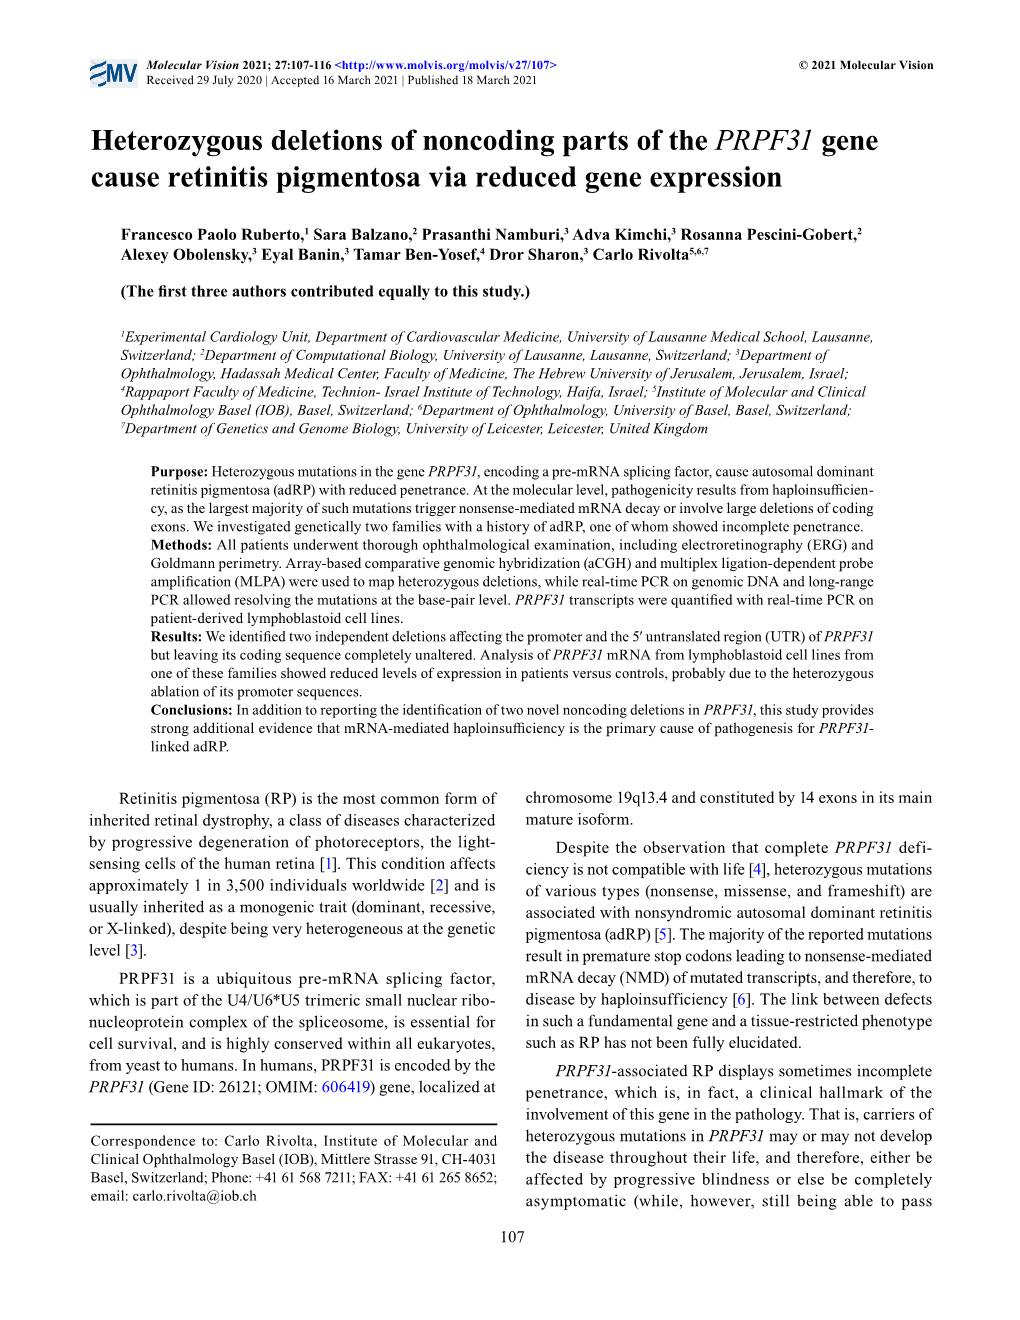 Heterozygous Deletions of Noncoding Parts of the PRPF31 Gene Cause Retinitis Pigmentosa Via Reduced Gene Expression